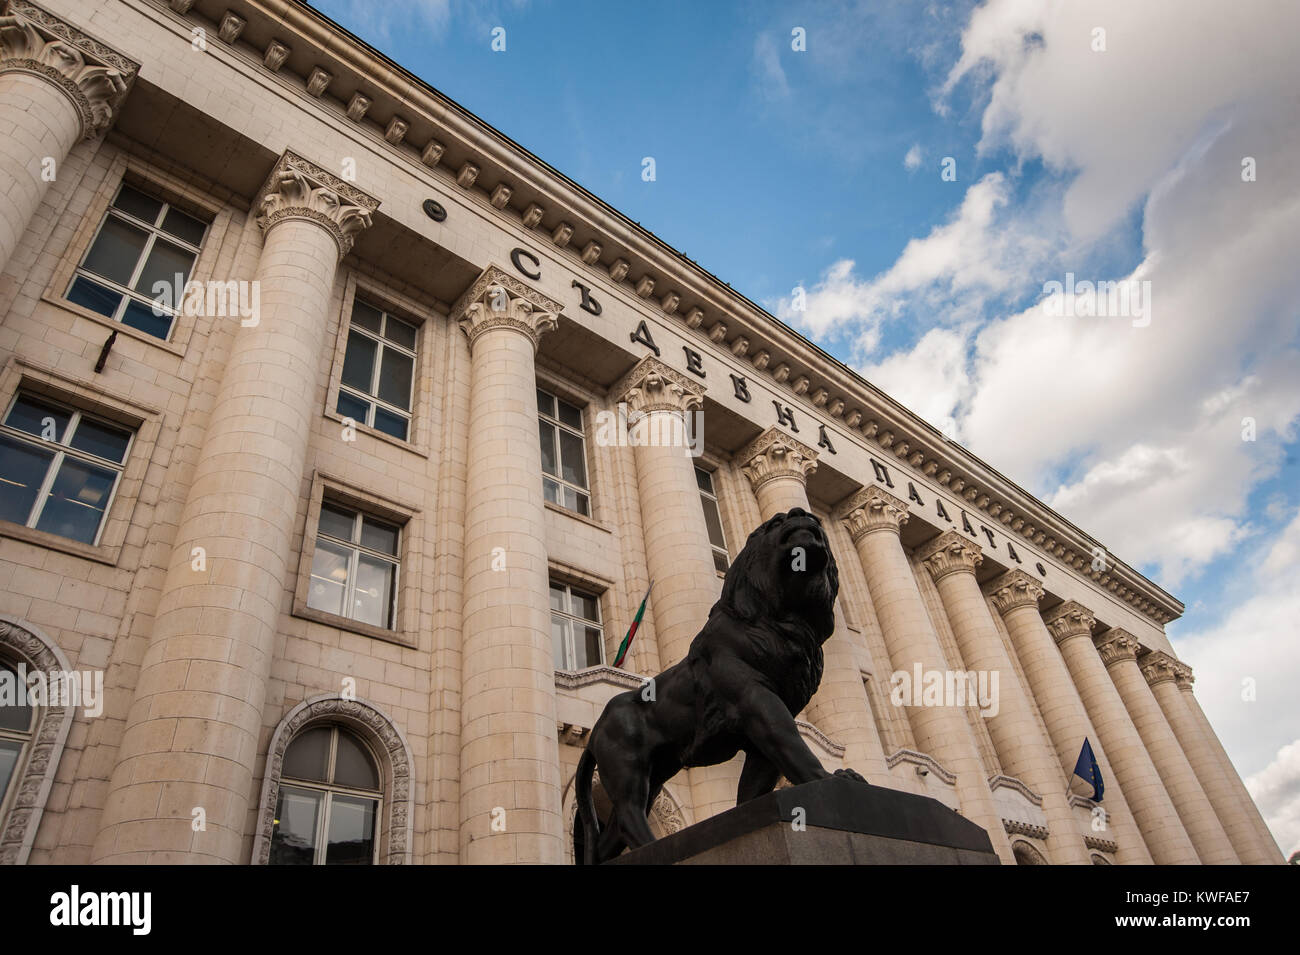 Palace of Justice Building, Sofia, Bulgaria. Stock Photo